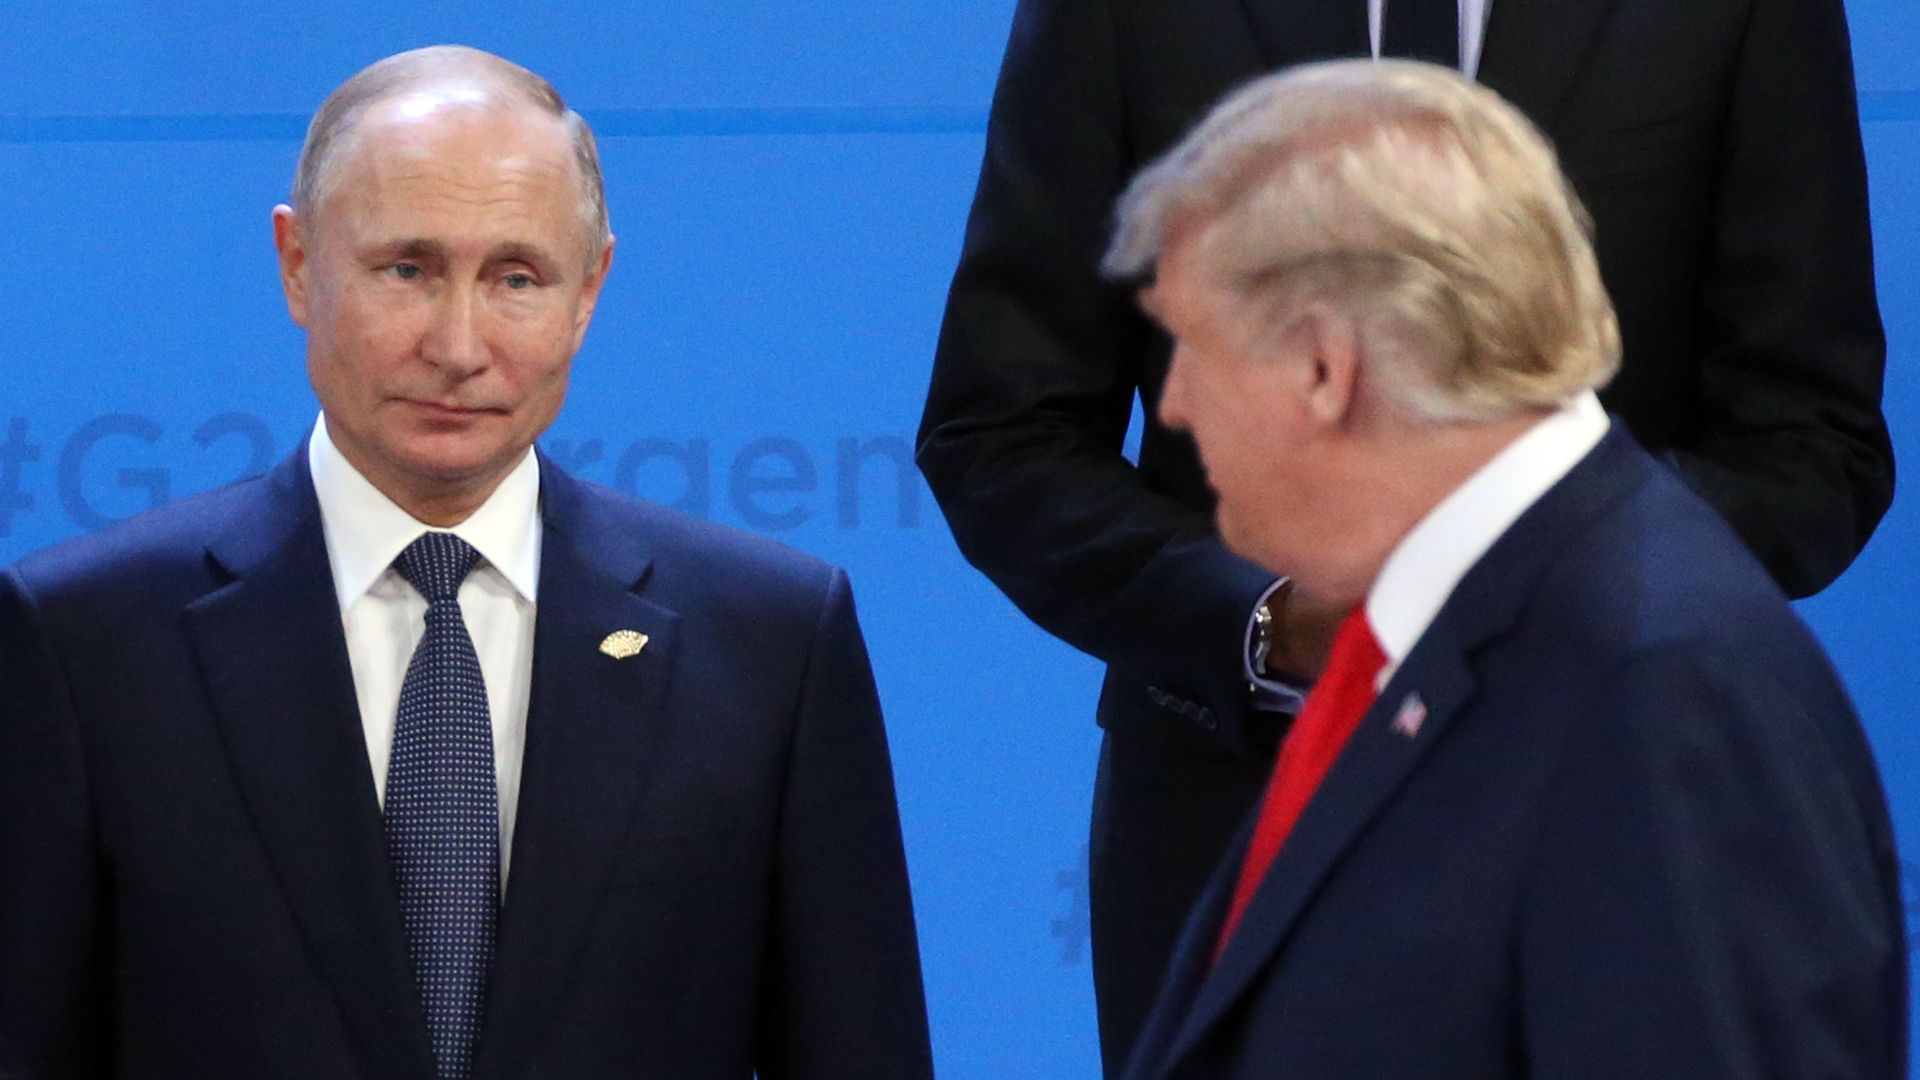 Trump and Putin at the 2018 G20 plenery